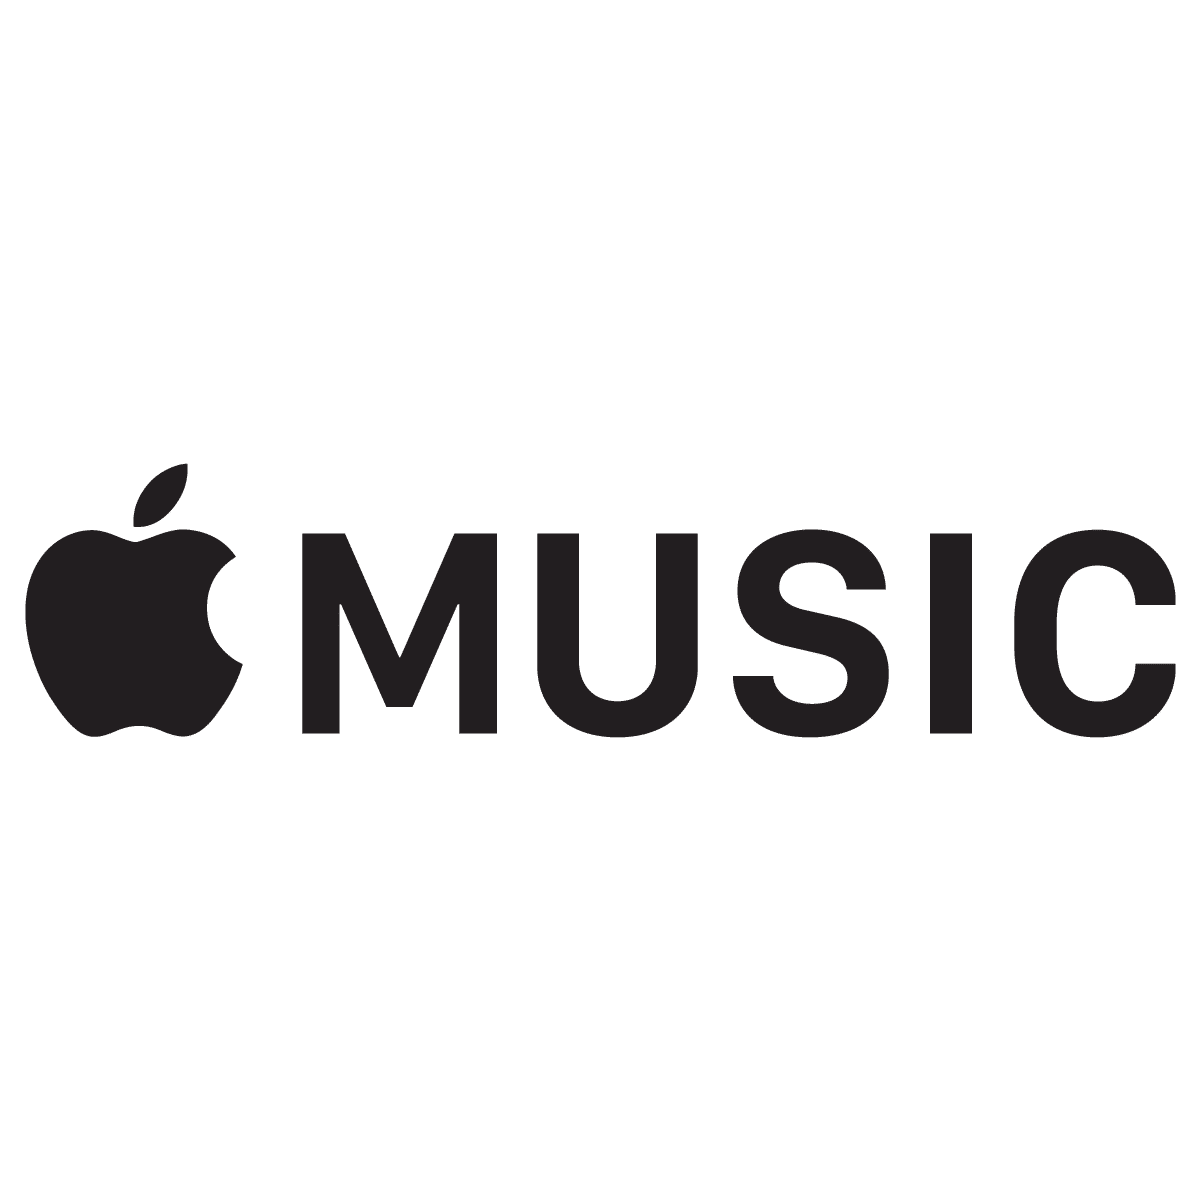 Apple music live